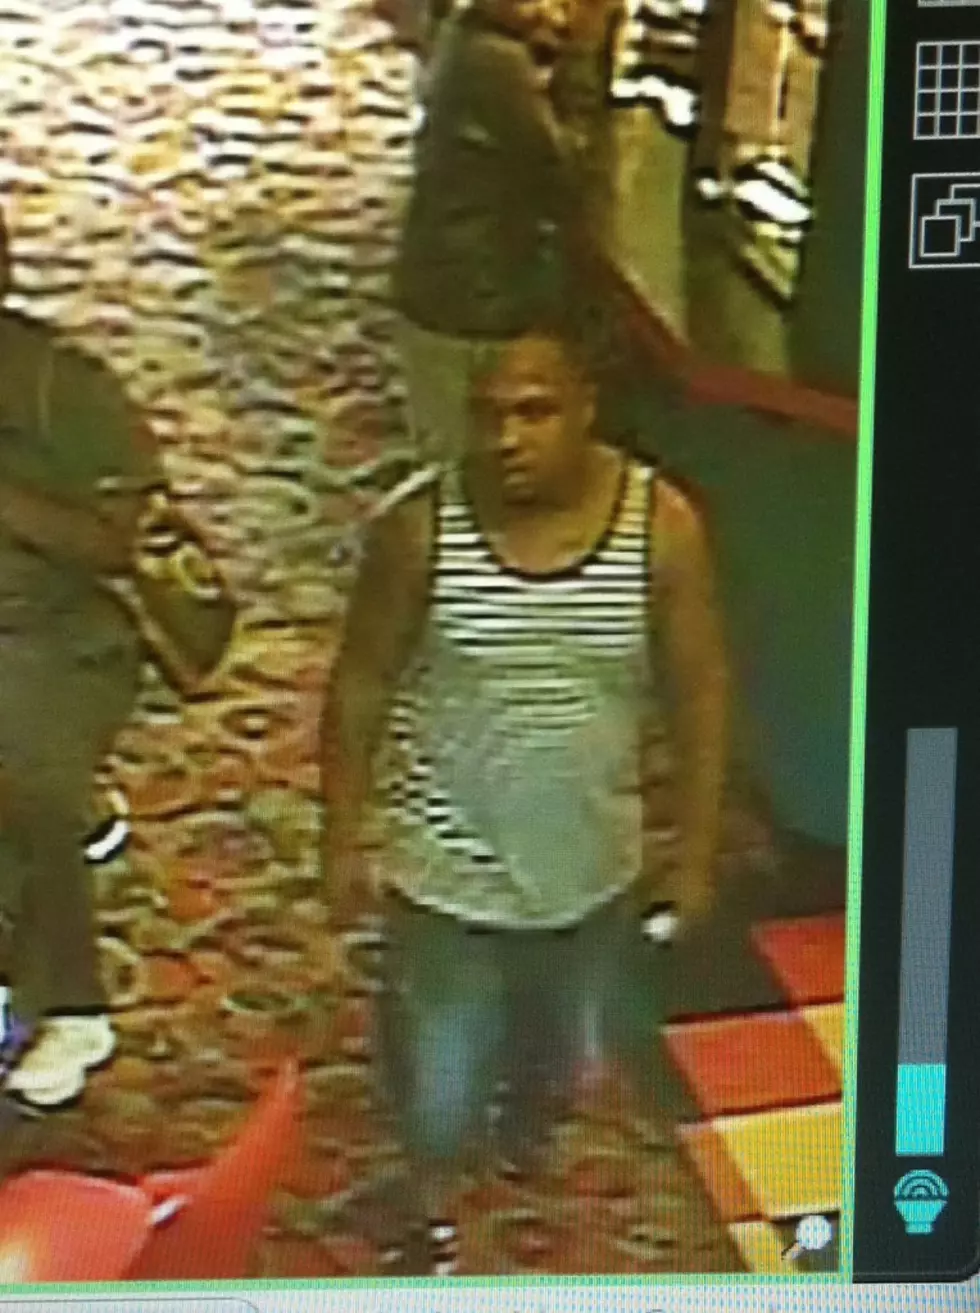 Accused Casino Robber On The Run From St. Martin Parish Authorities